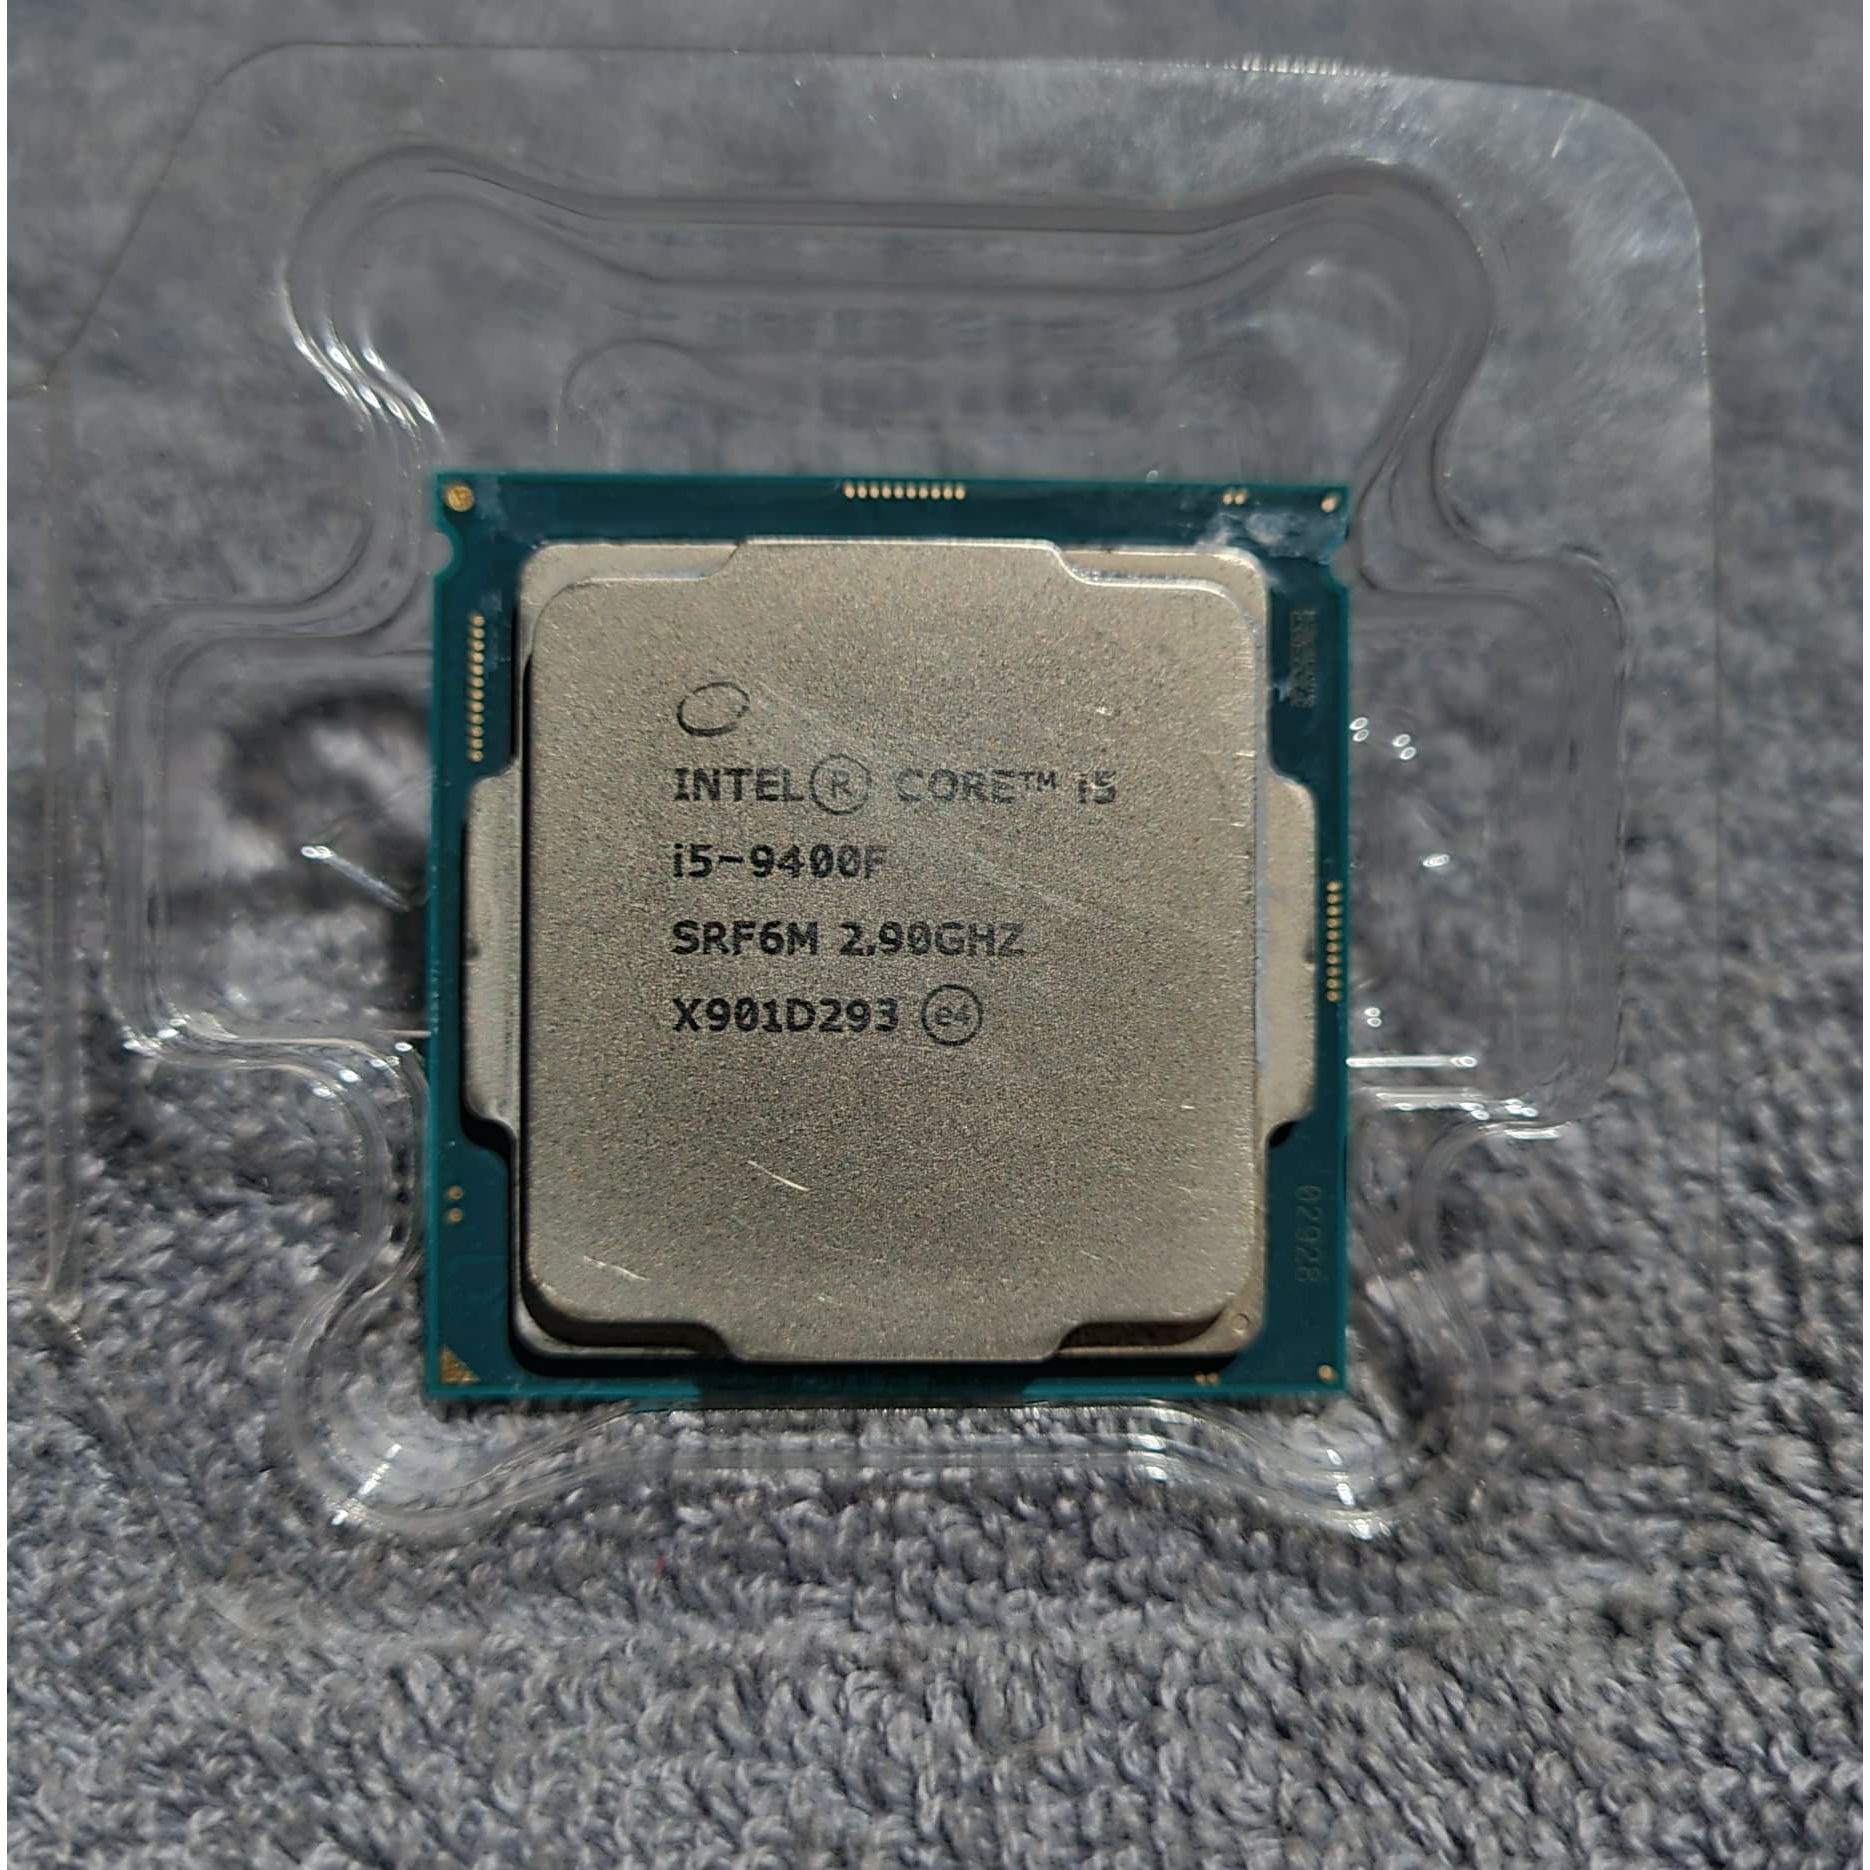 CPU (ซีพียู) 1151 INTEL CORE I5 9400F 6C/6T 2.90 GHz มือ2 ใช้งานปกติ (มีแต่ตัวซัพียู) ประกันใจ 10 วัน